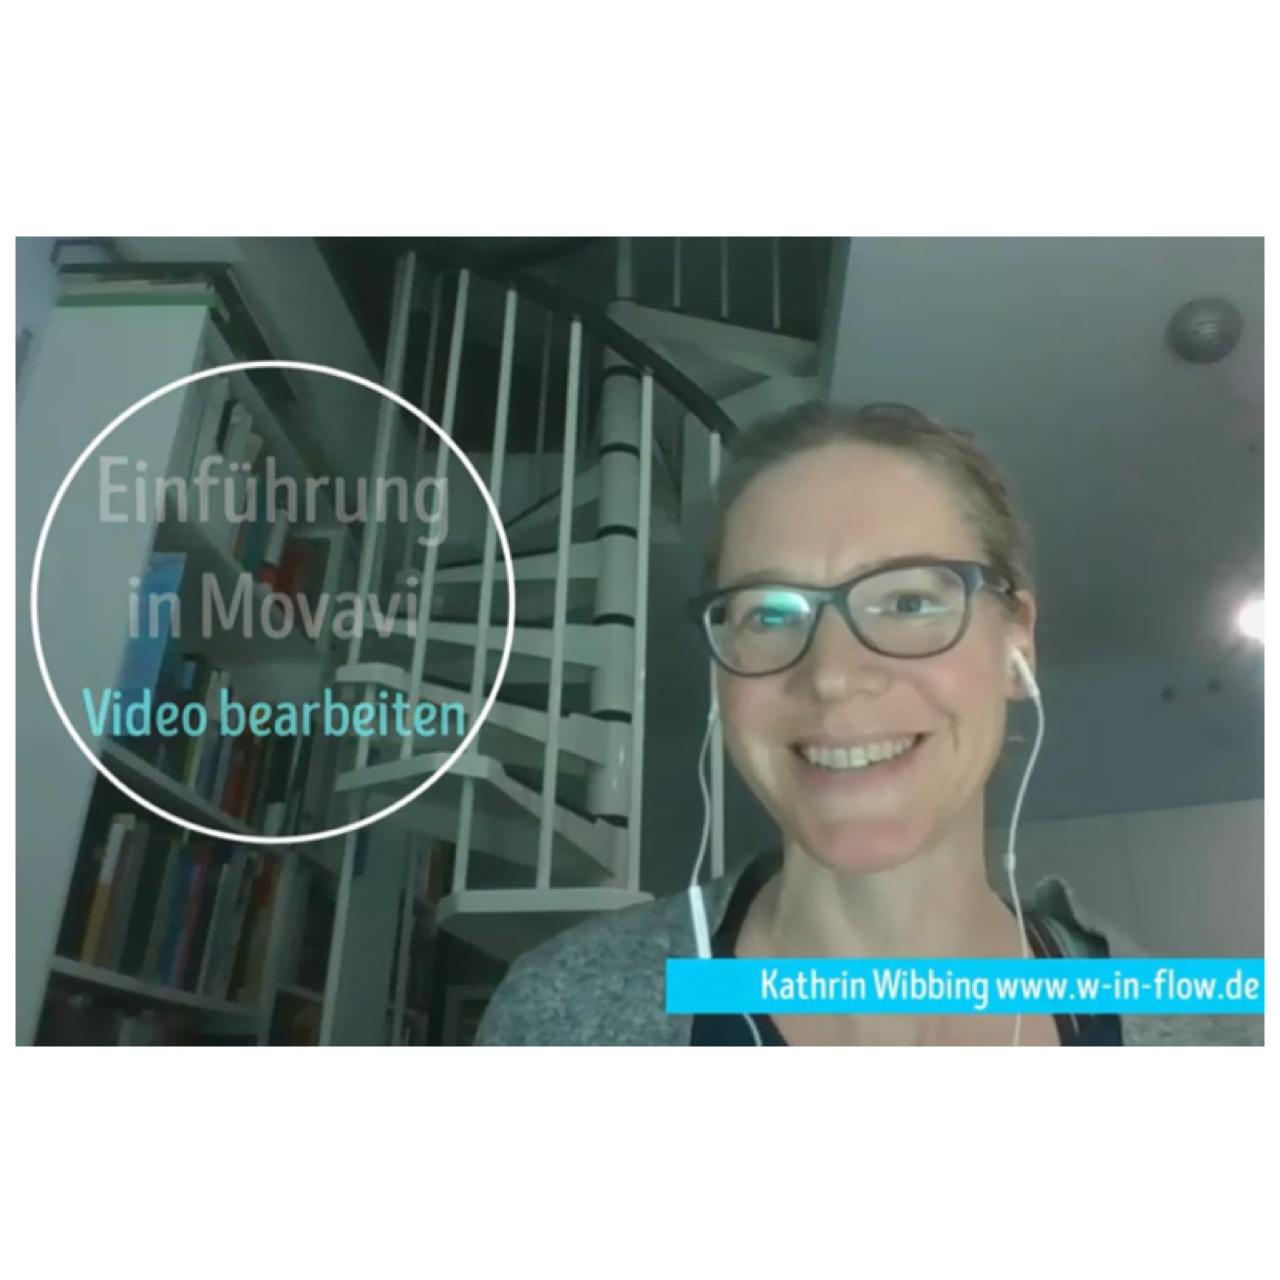 Movavi Videoschnitt mit Kathrin Wibbing